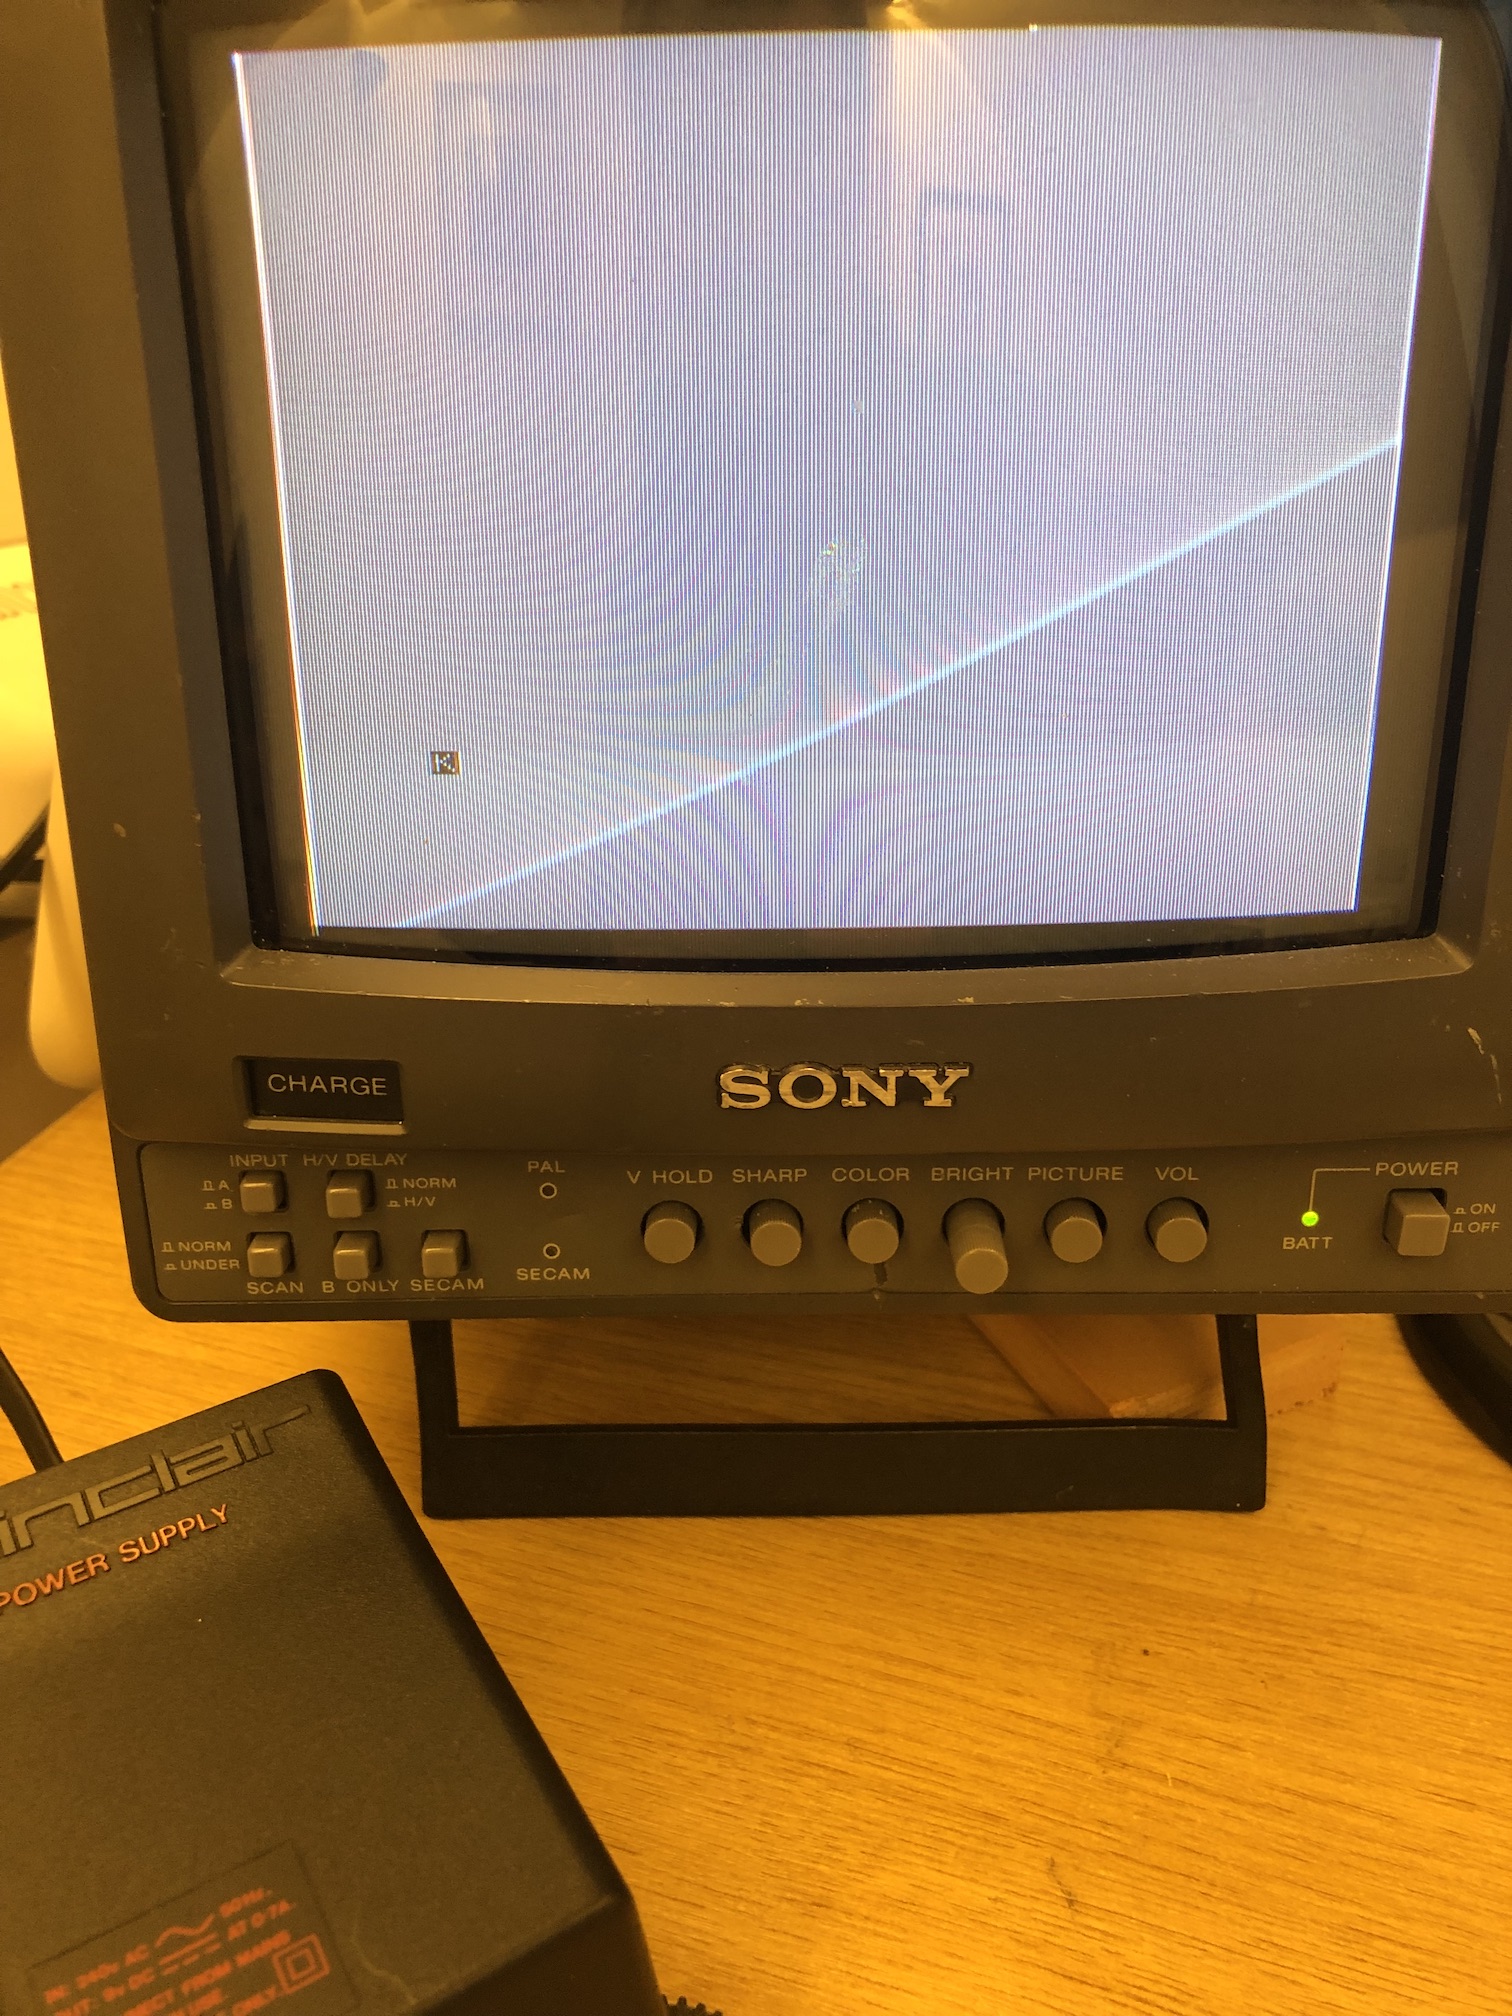 ZX81 working again